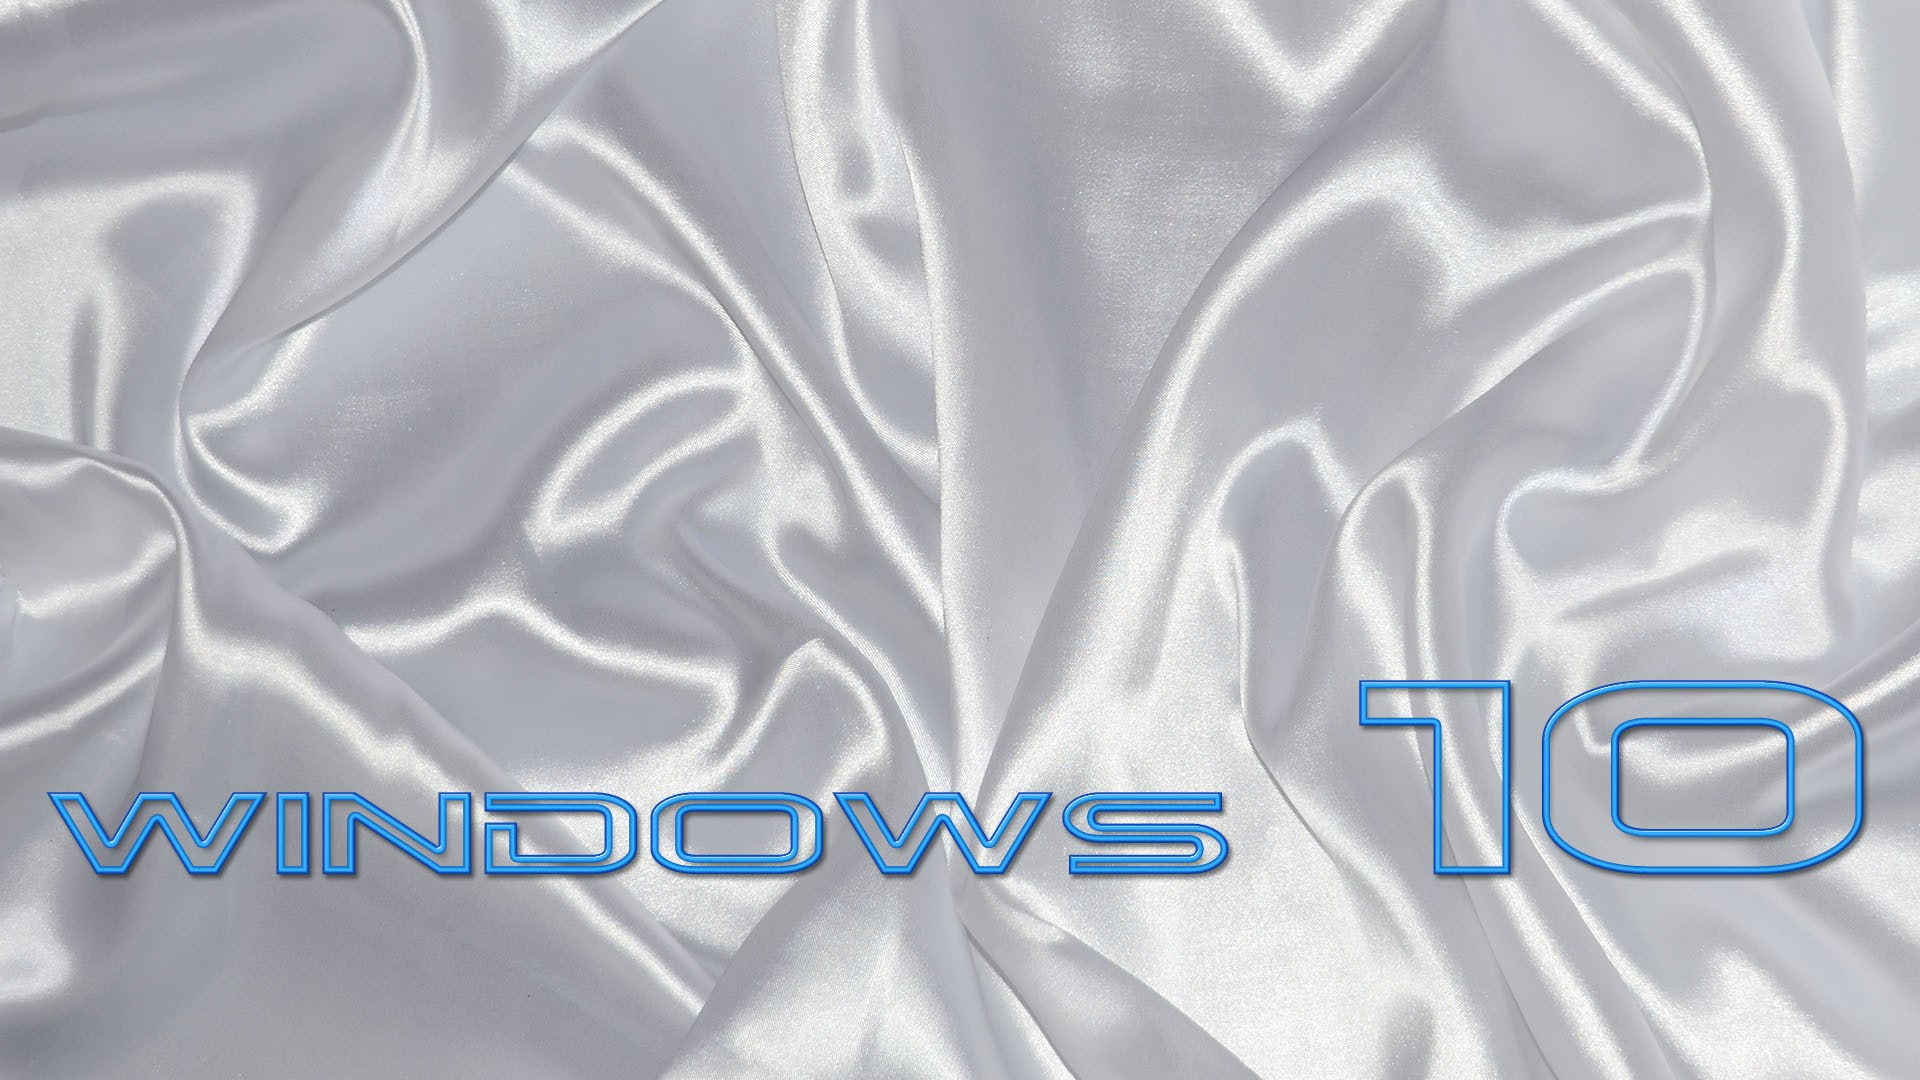 Windows 10, Microsoft Windows, satin, indoors, studio shot